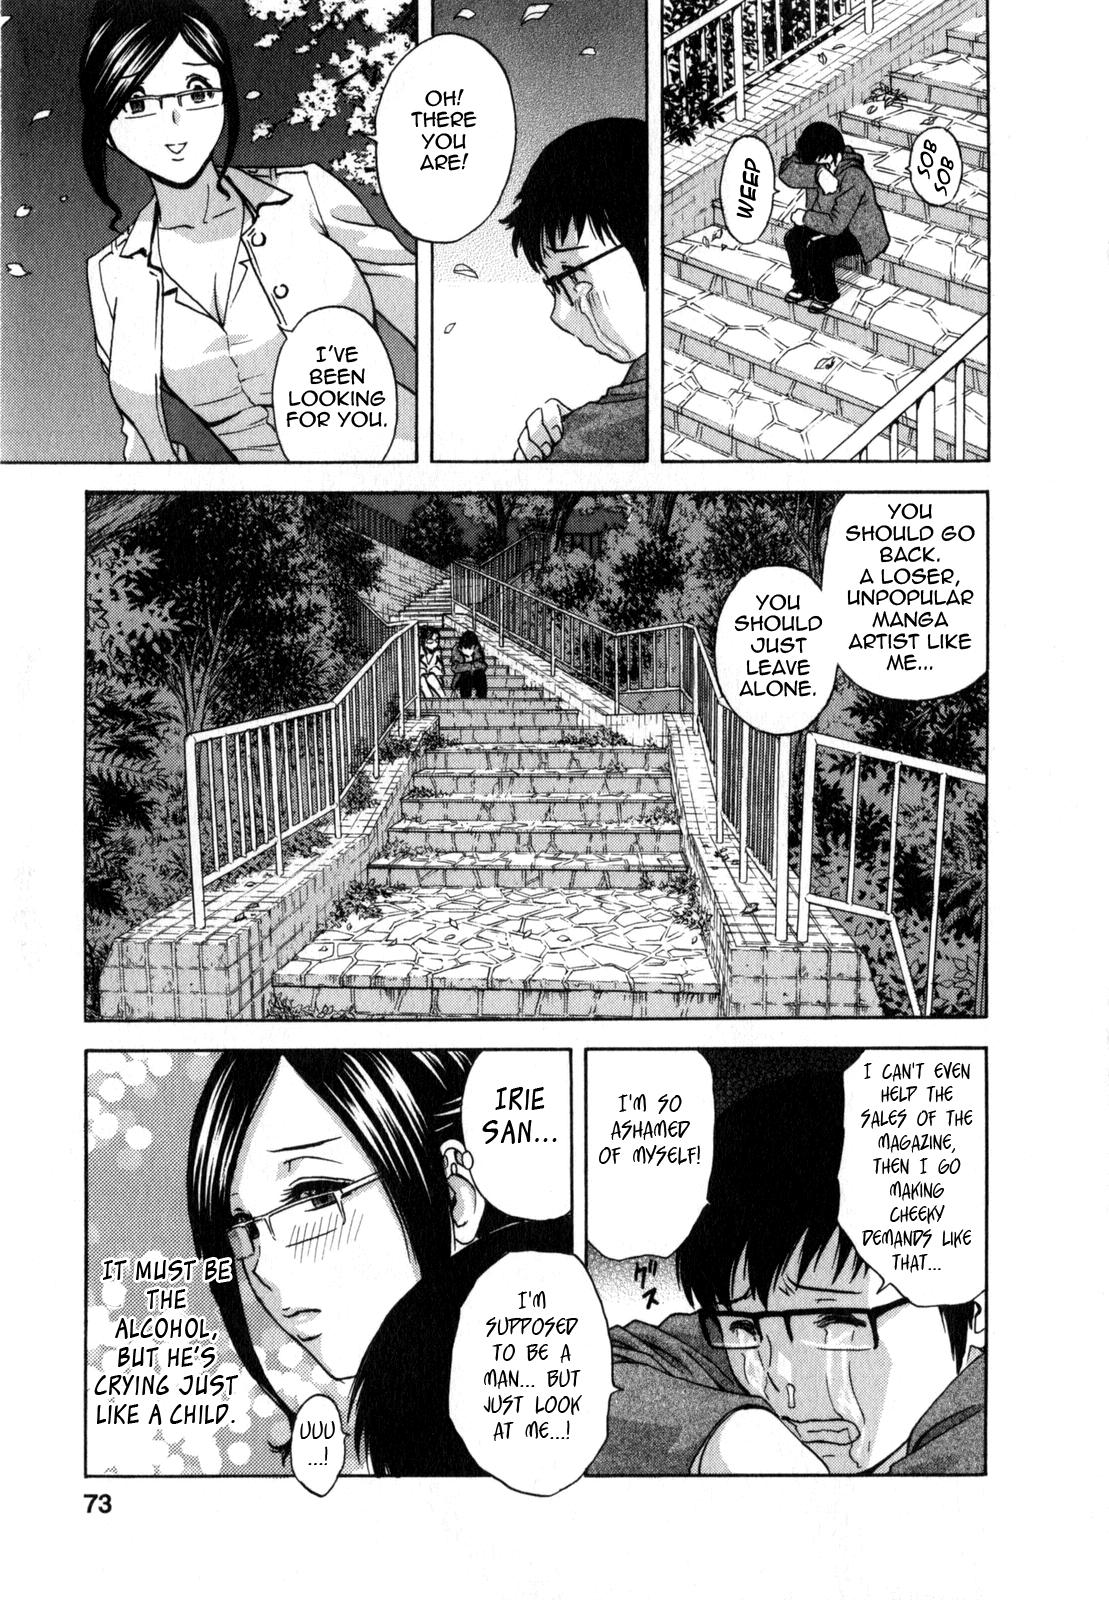 [Hidemaru] Life with Married Women Just Like a Manga 2 - Ch. 1-6 [English] {Tadanohito} 75